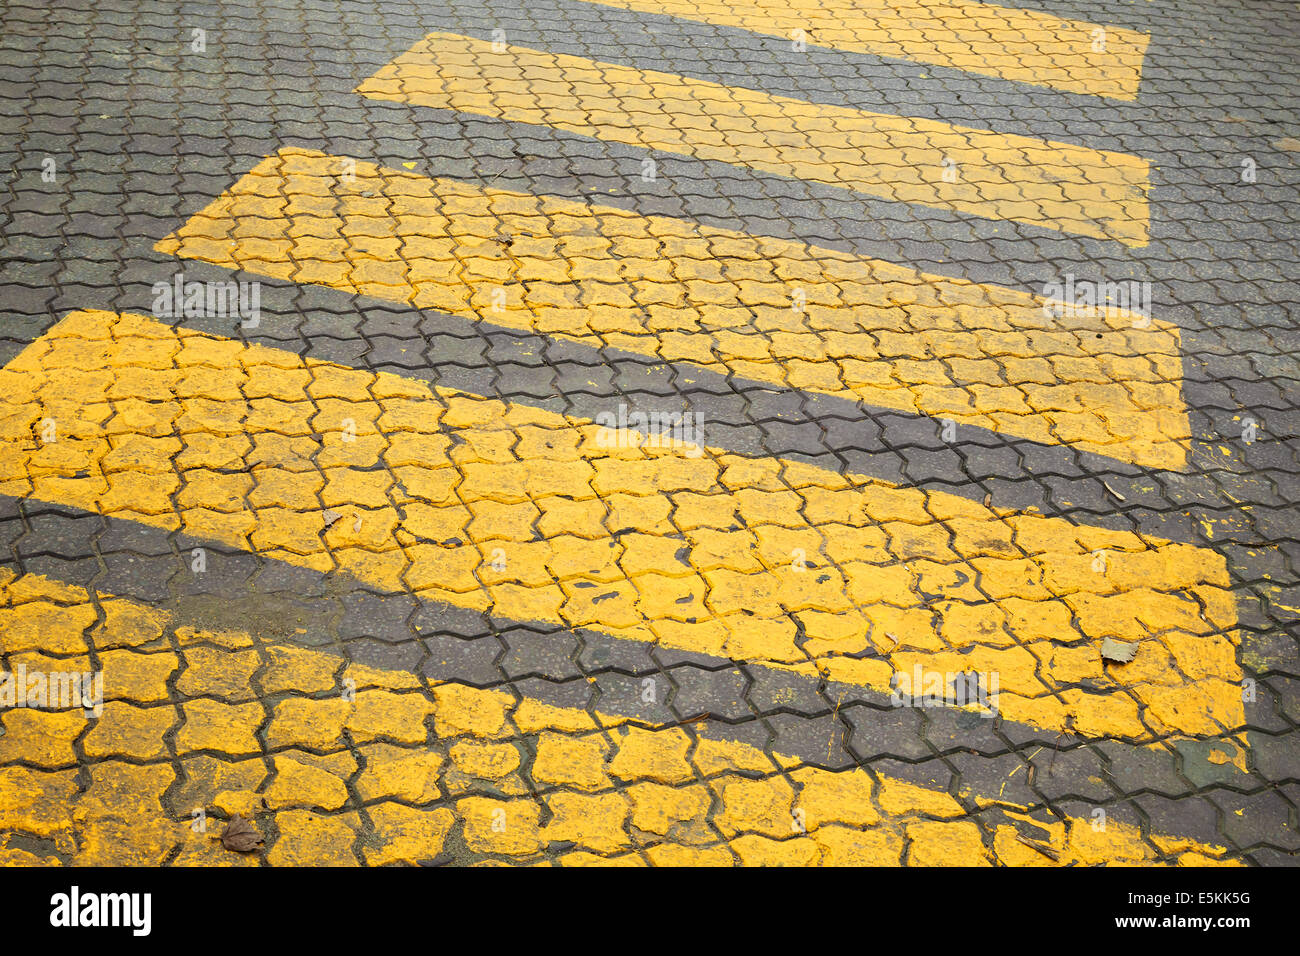 Pedestrian crossing, yellow marking on cobblestone road pavement Stock Photo